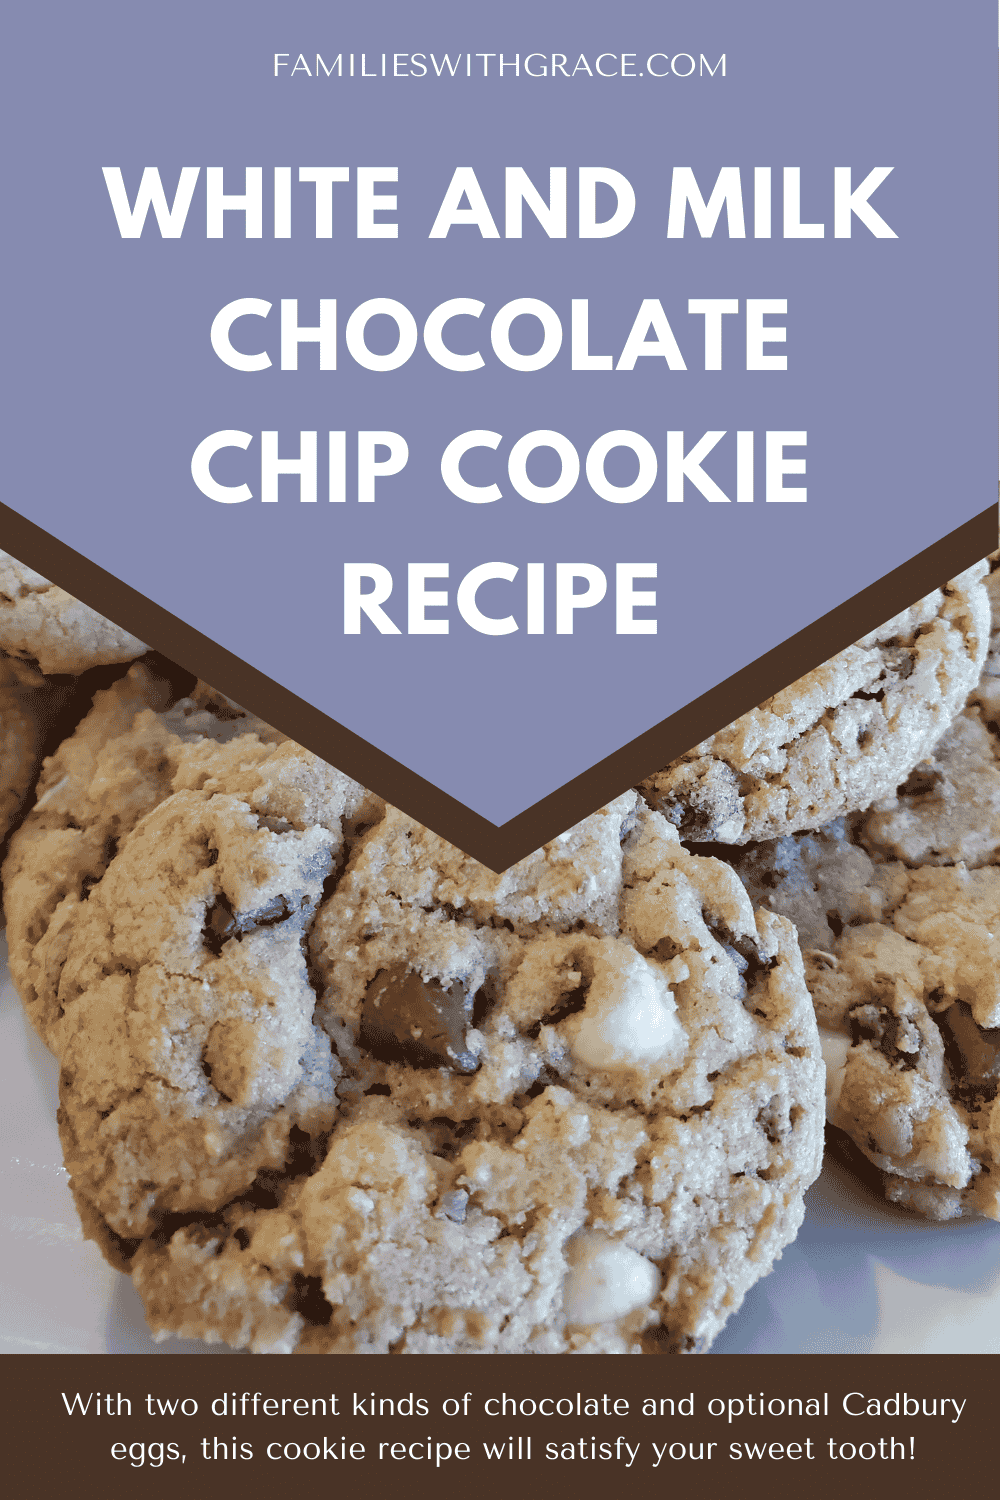 White and milk chocolate chip cookie recipe